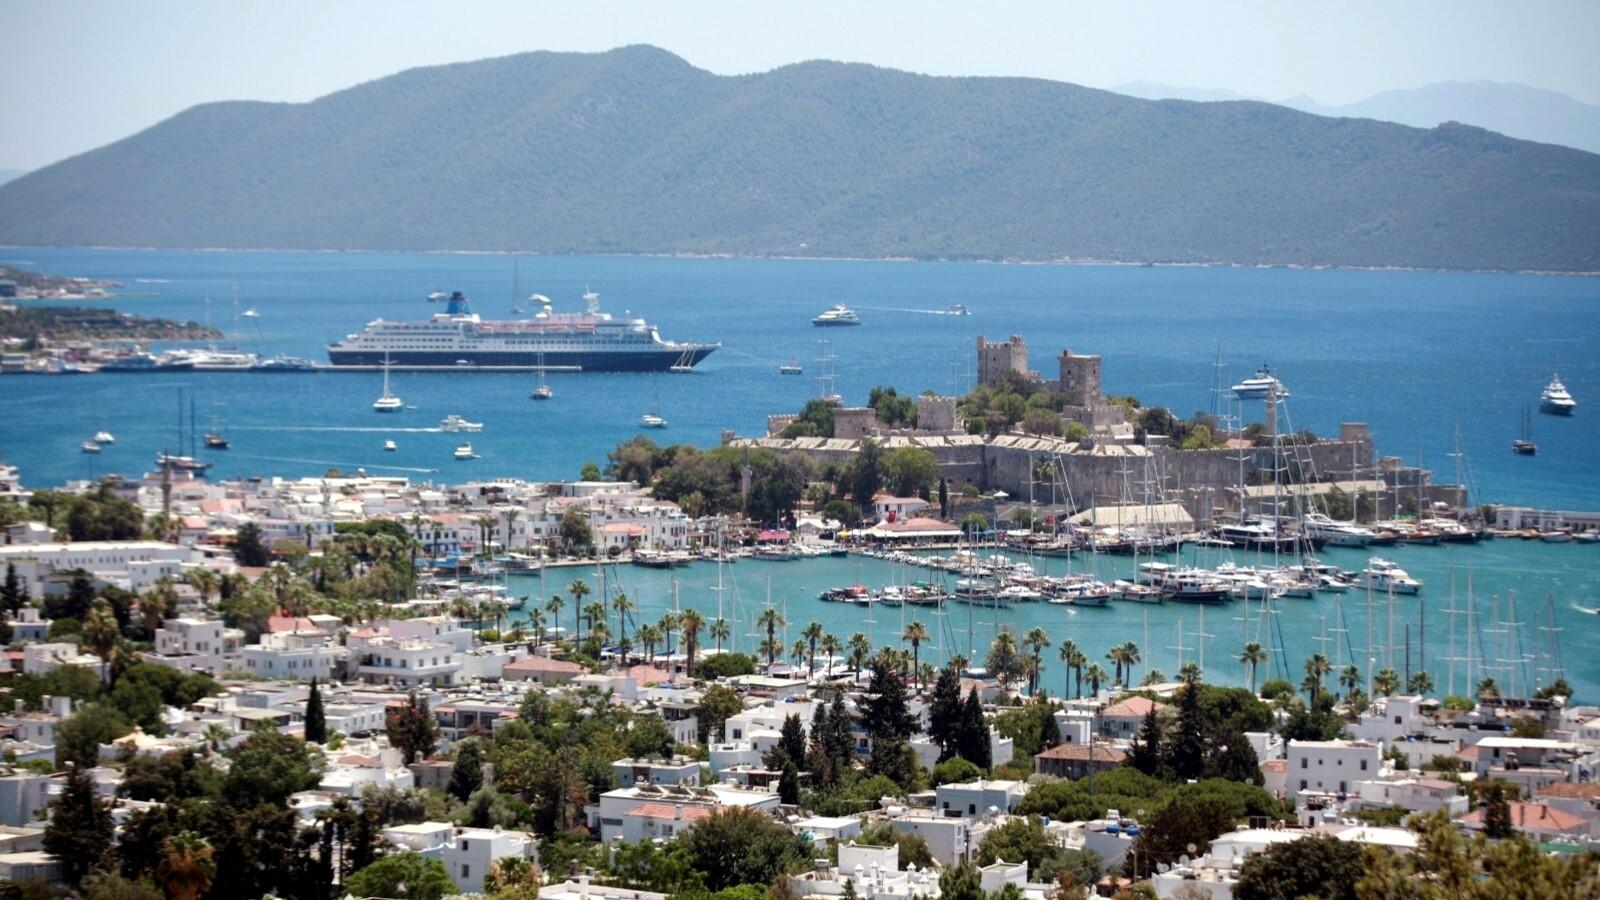 Türkiye steeds groter aandeel in luxetoerisme